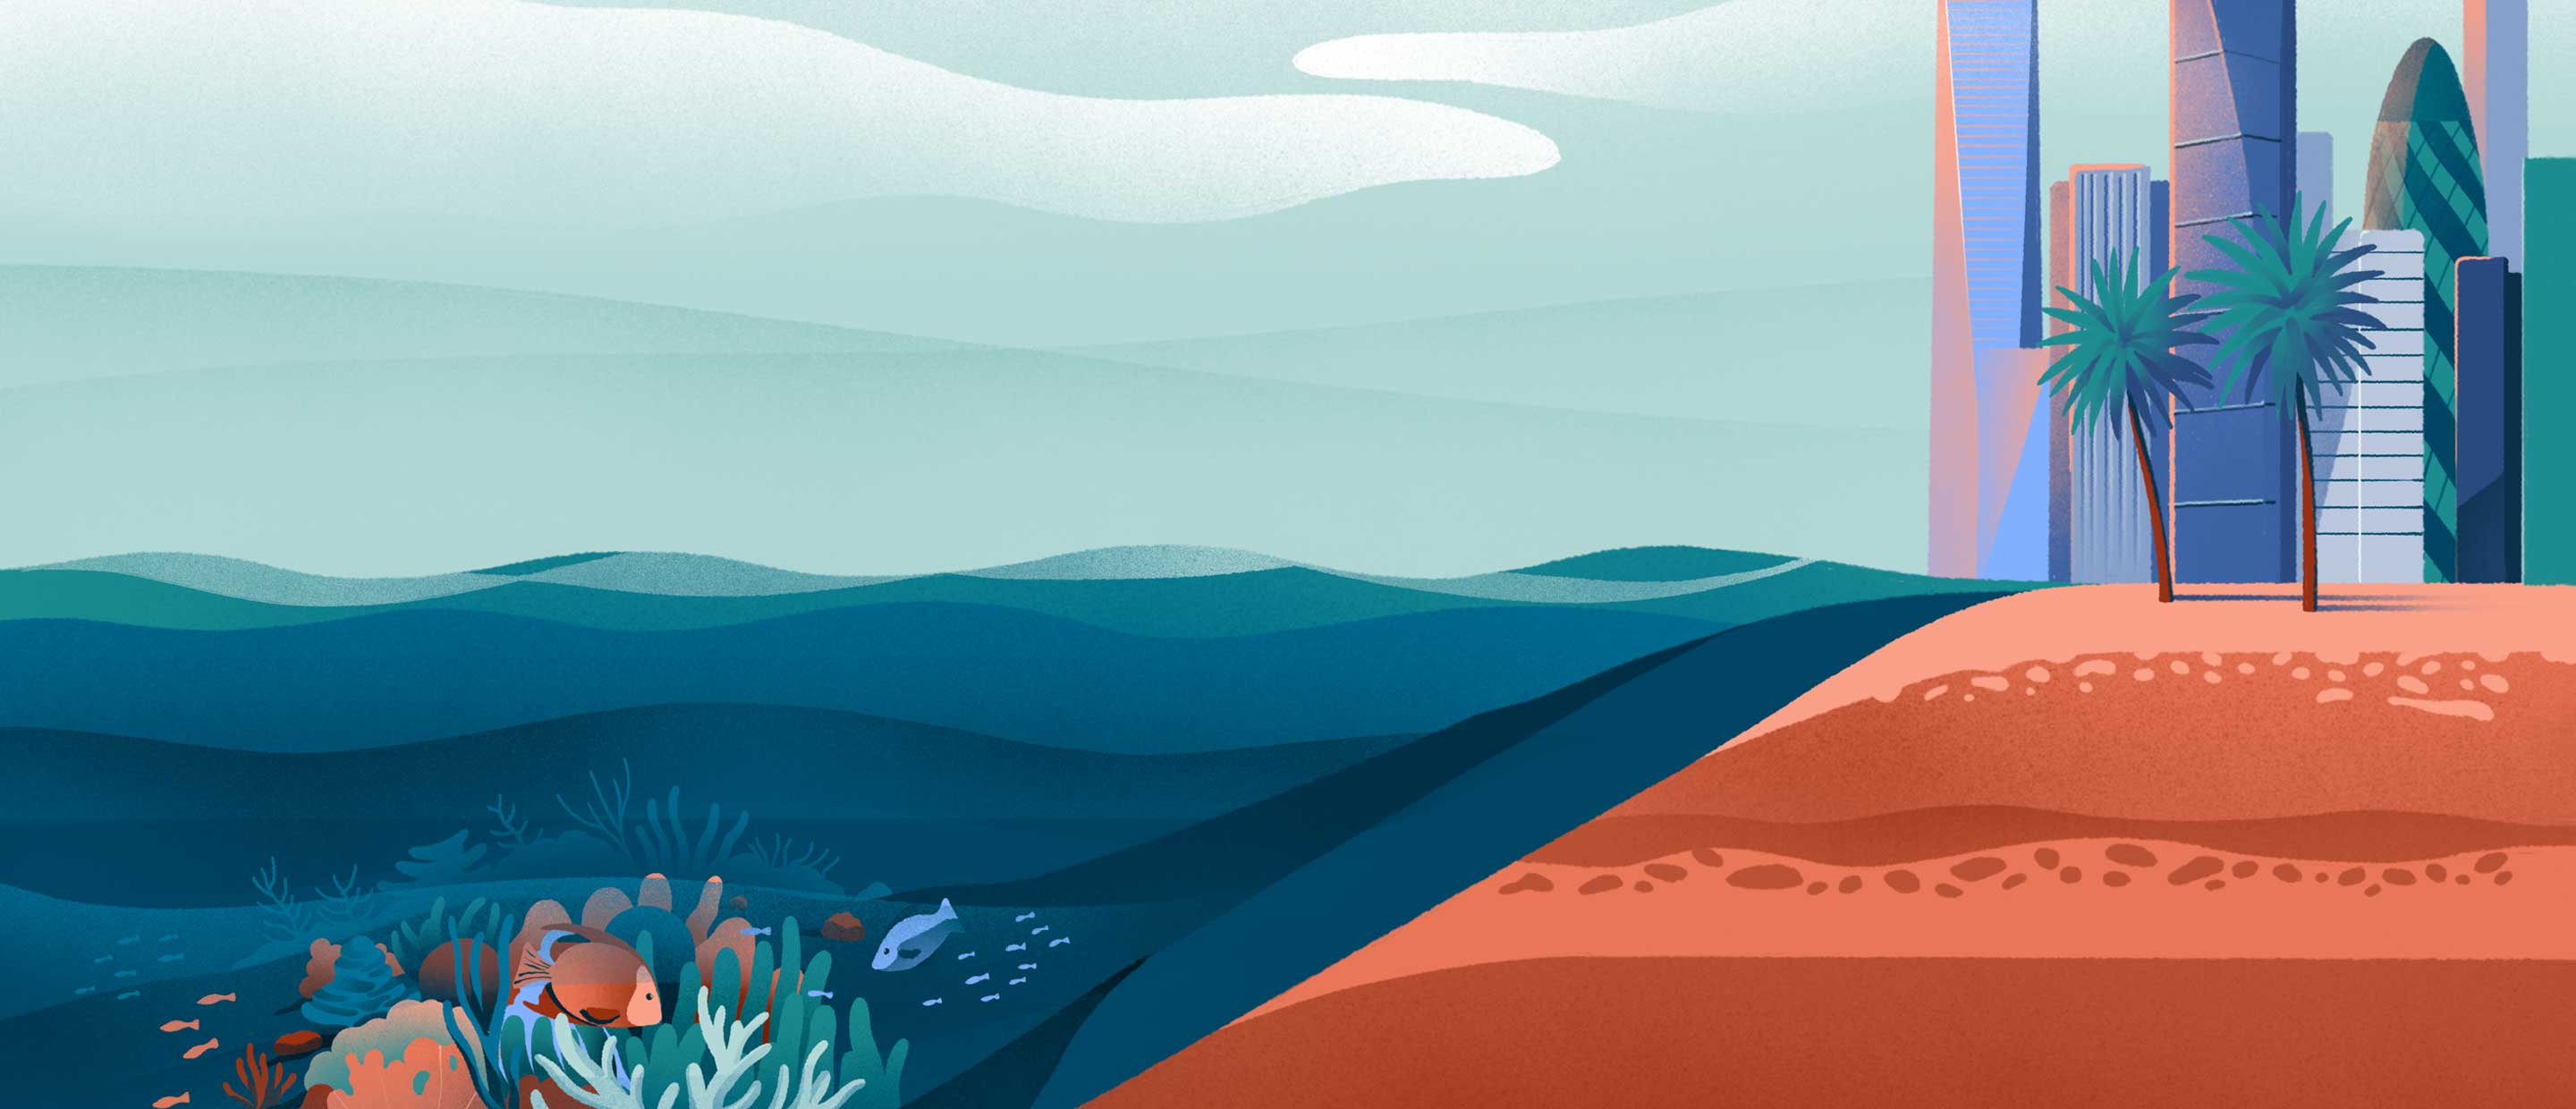 ocean resilience philanthropy fund